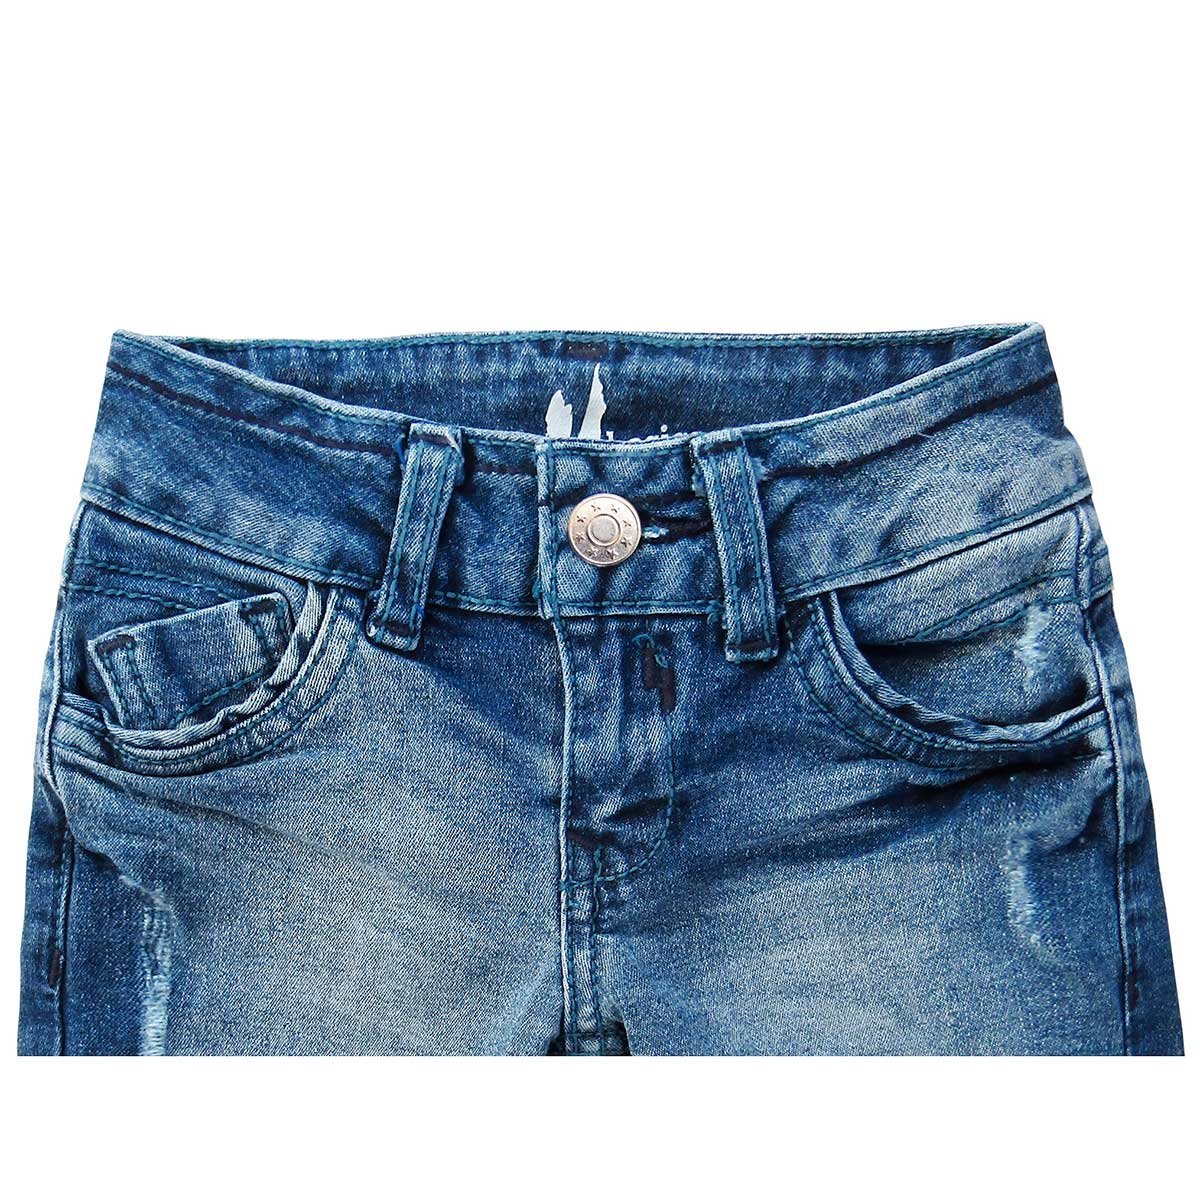 Jeans con Detalle de Costura U Basics